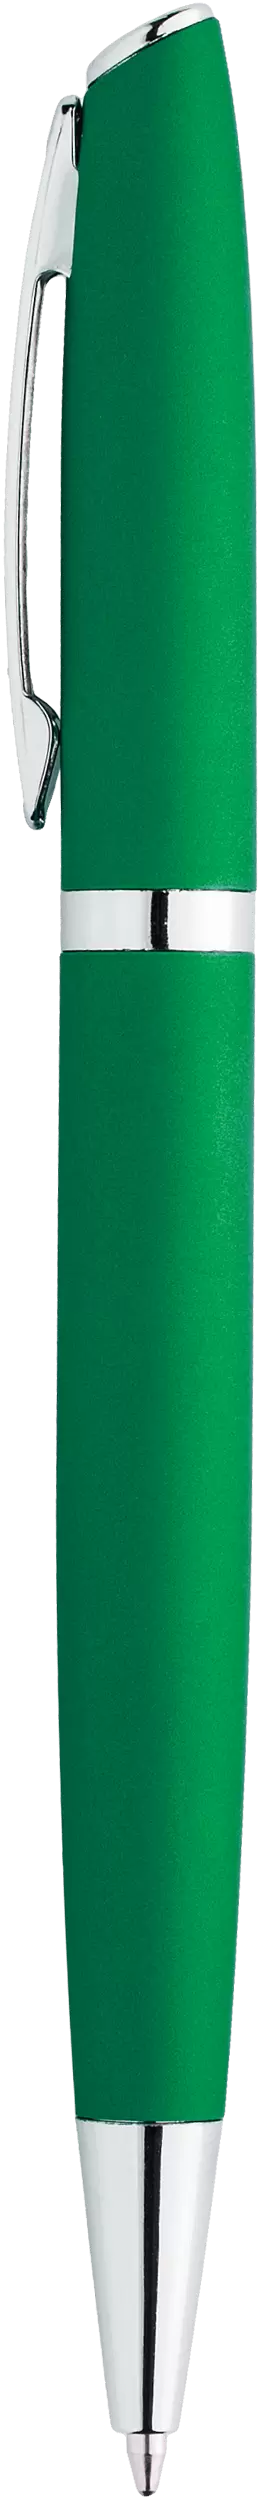 Ручка VESTA SOFT Зеленая 1121-02